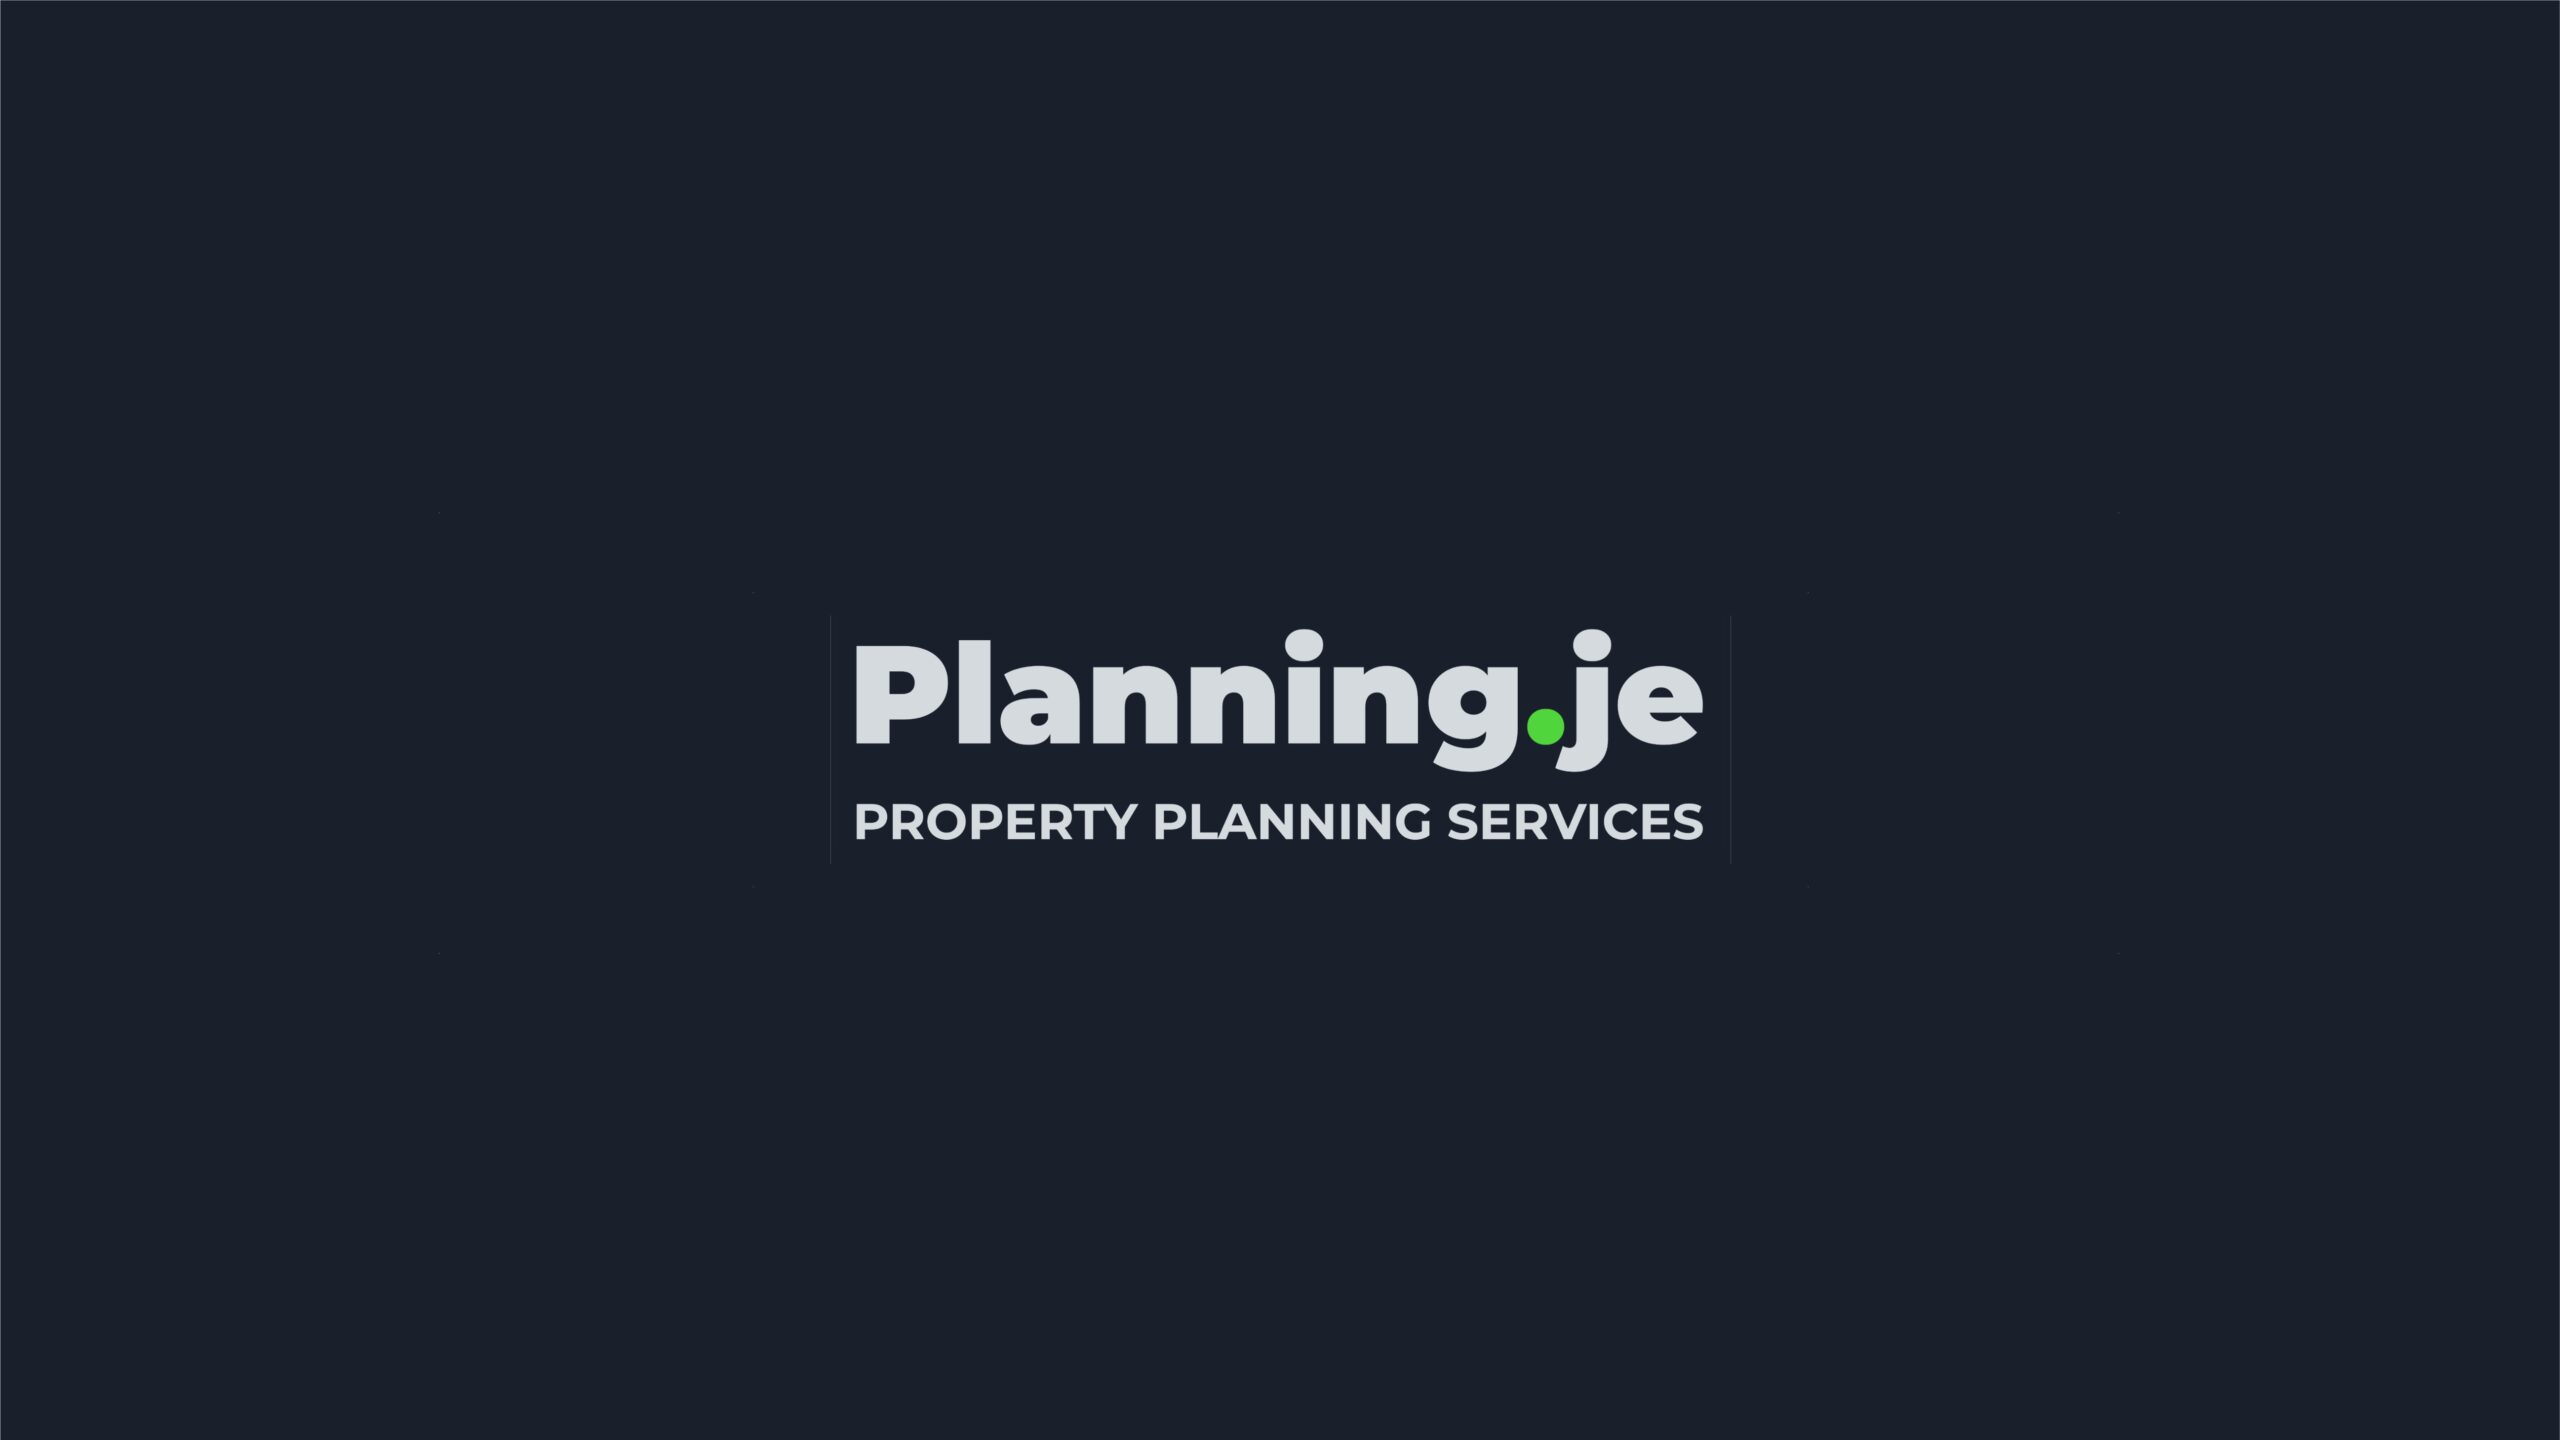 Planning.je Introduction Presentation Logo Cover